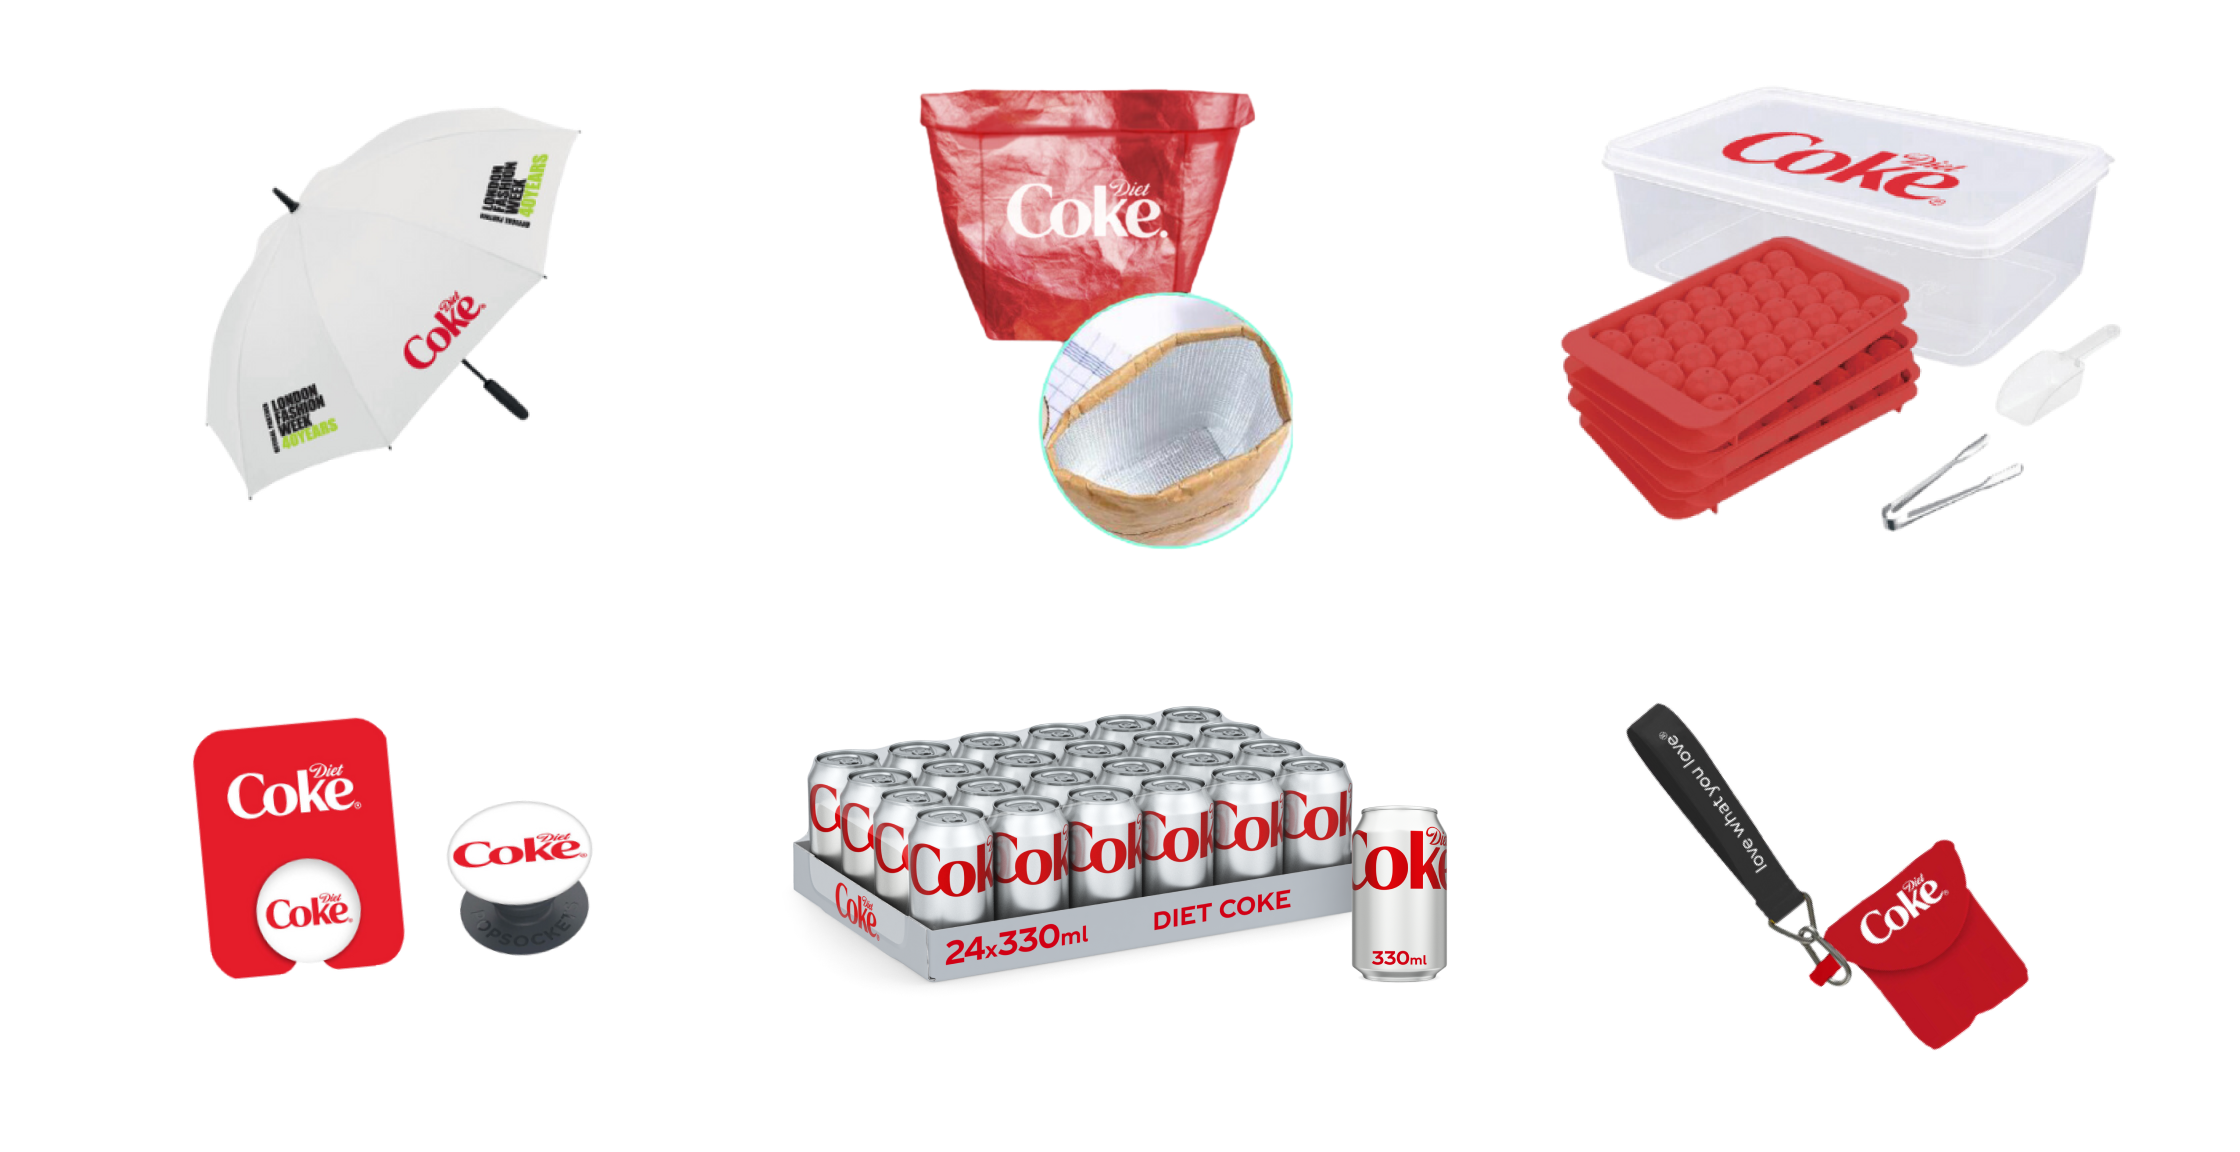 diet coke umbrella, cooler, cans